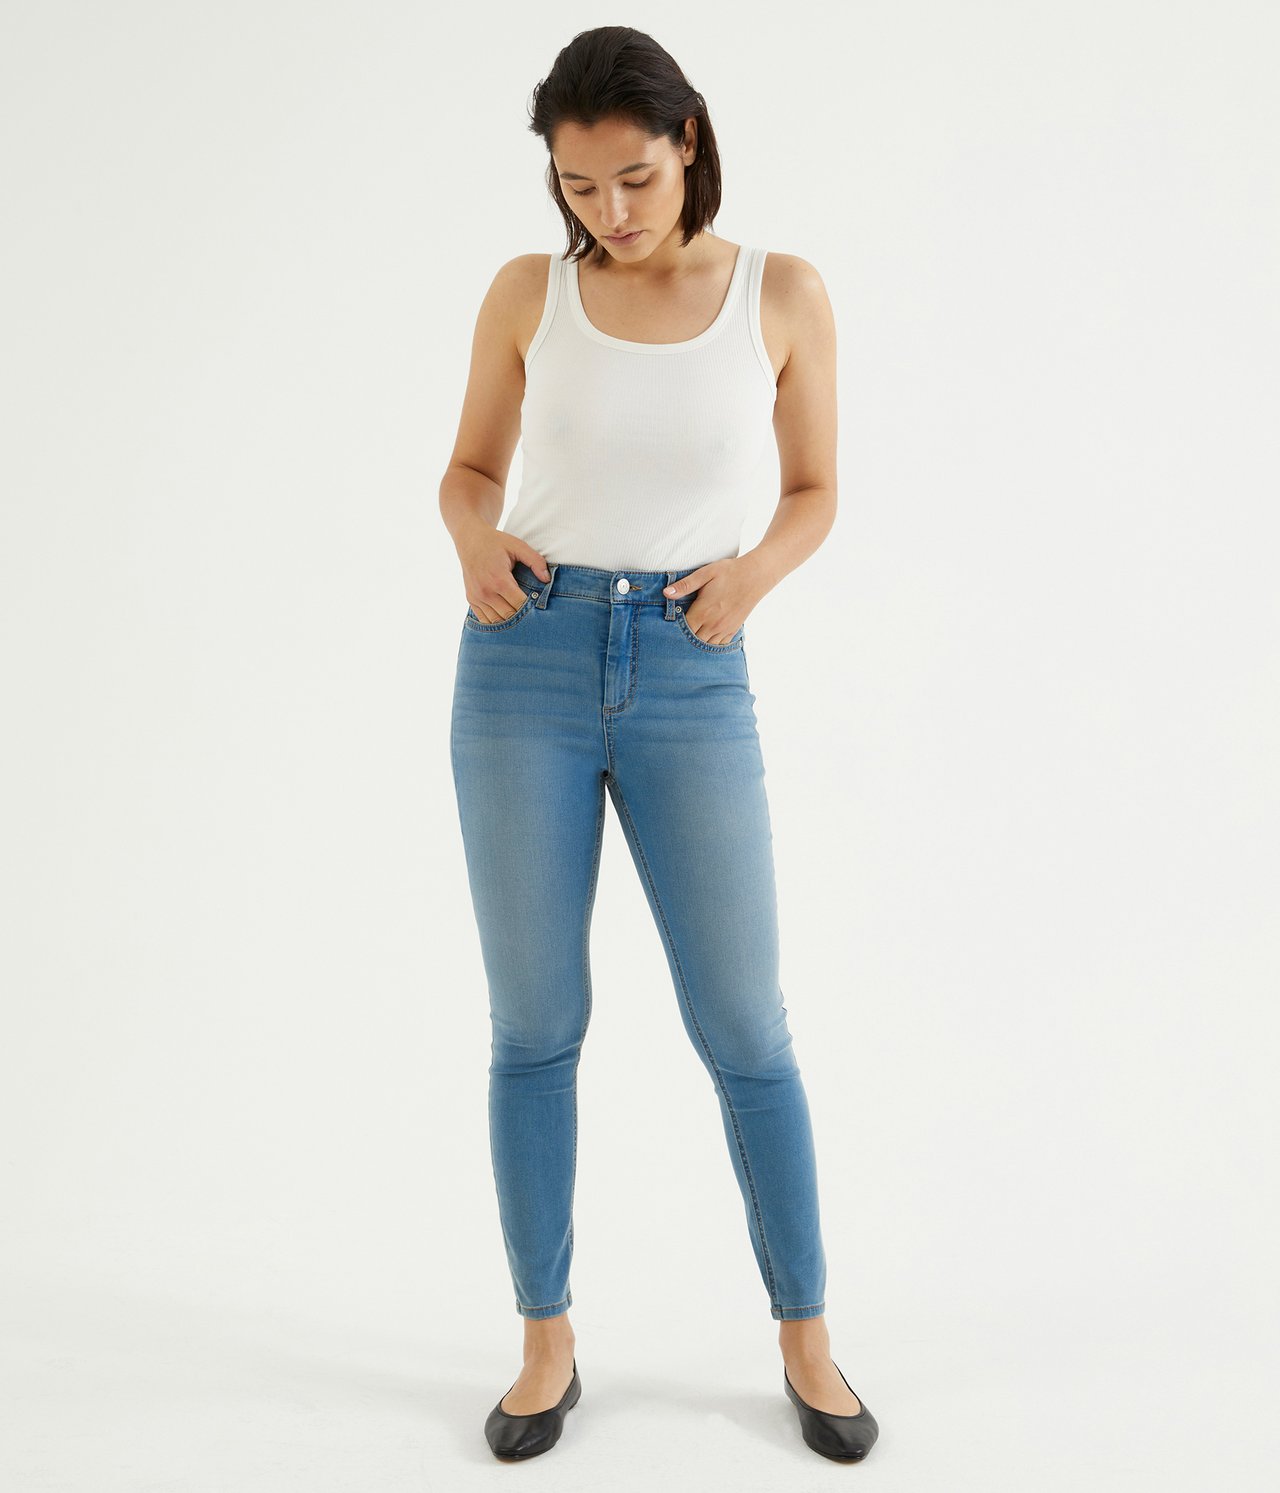 Super slim jeans short leg - Denimi - 1